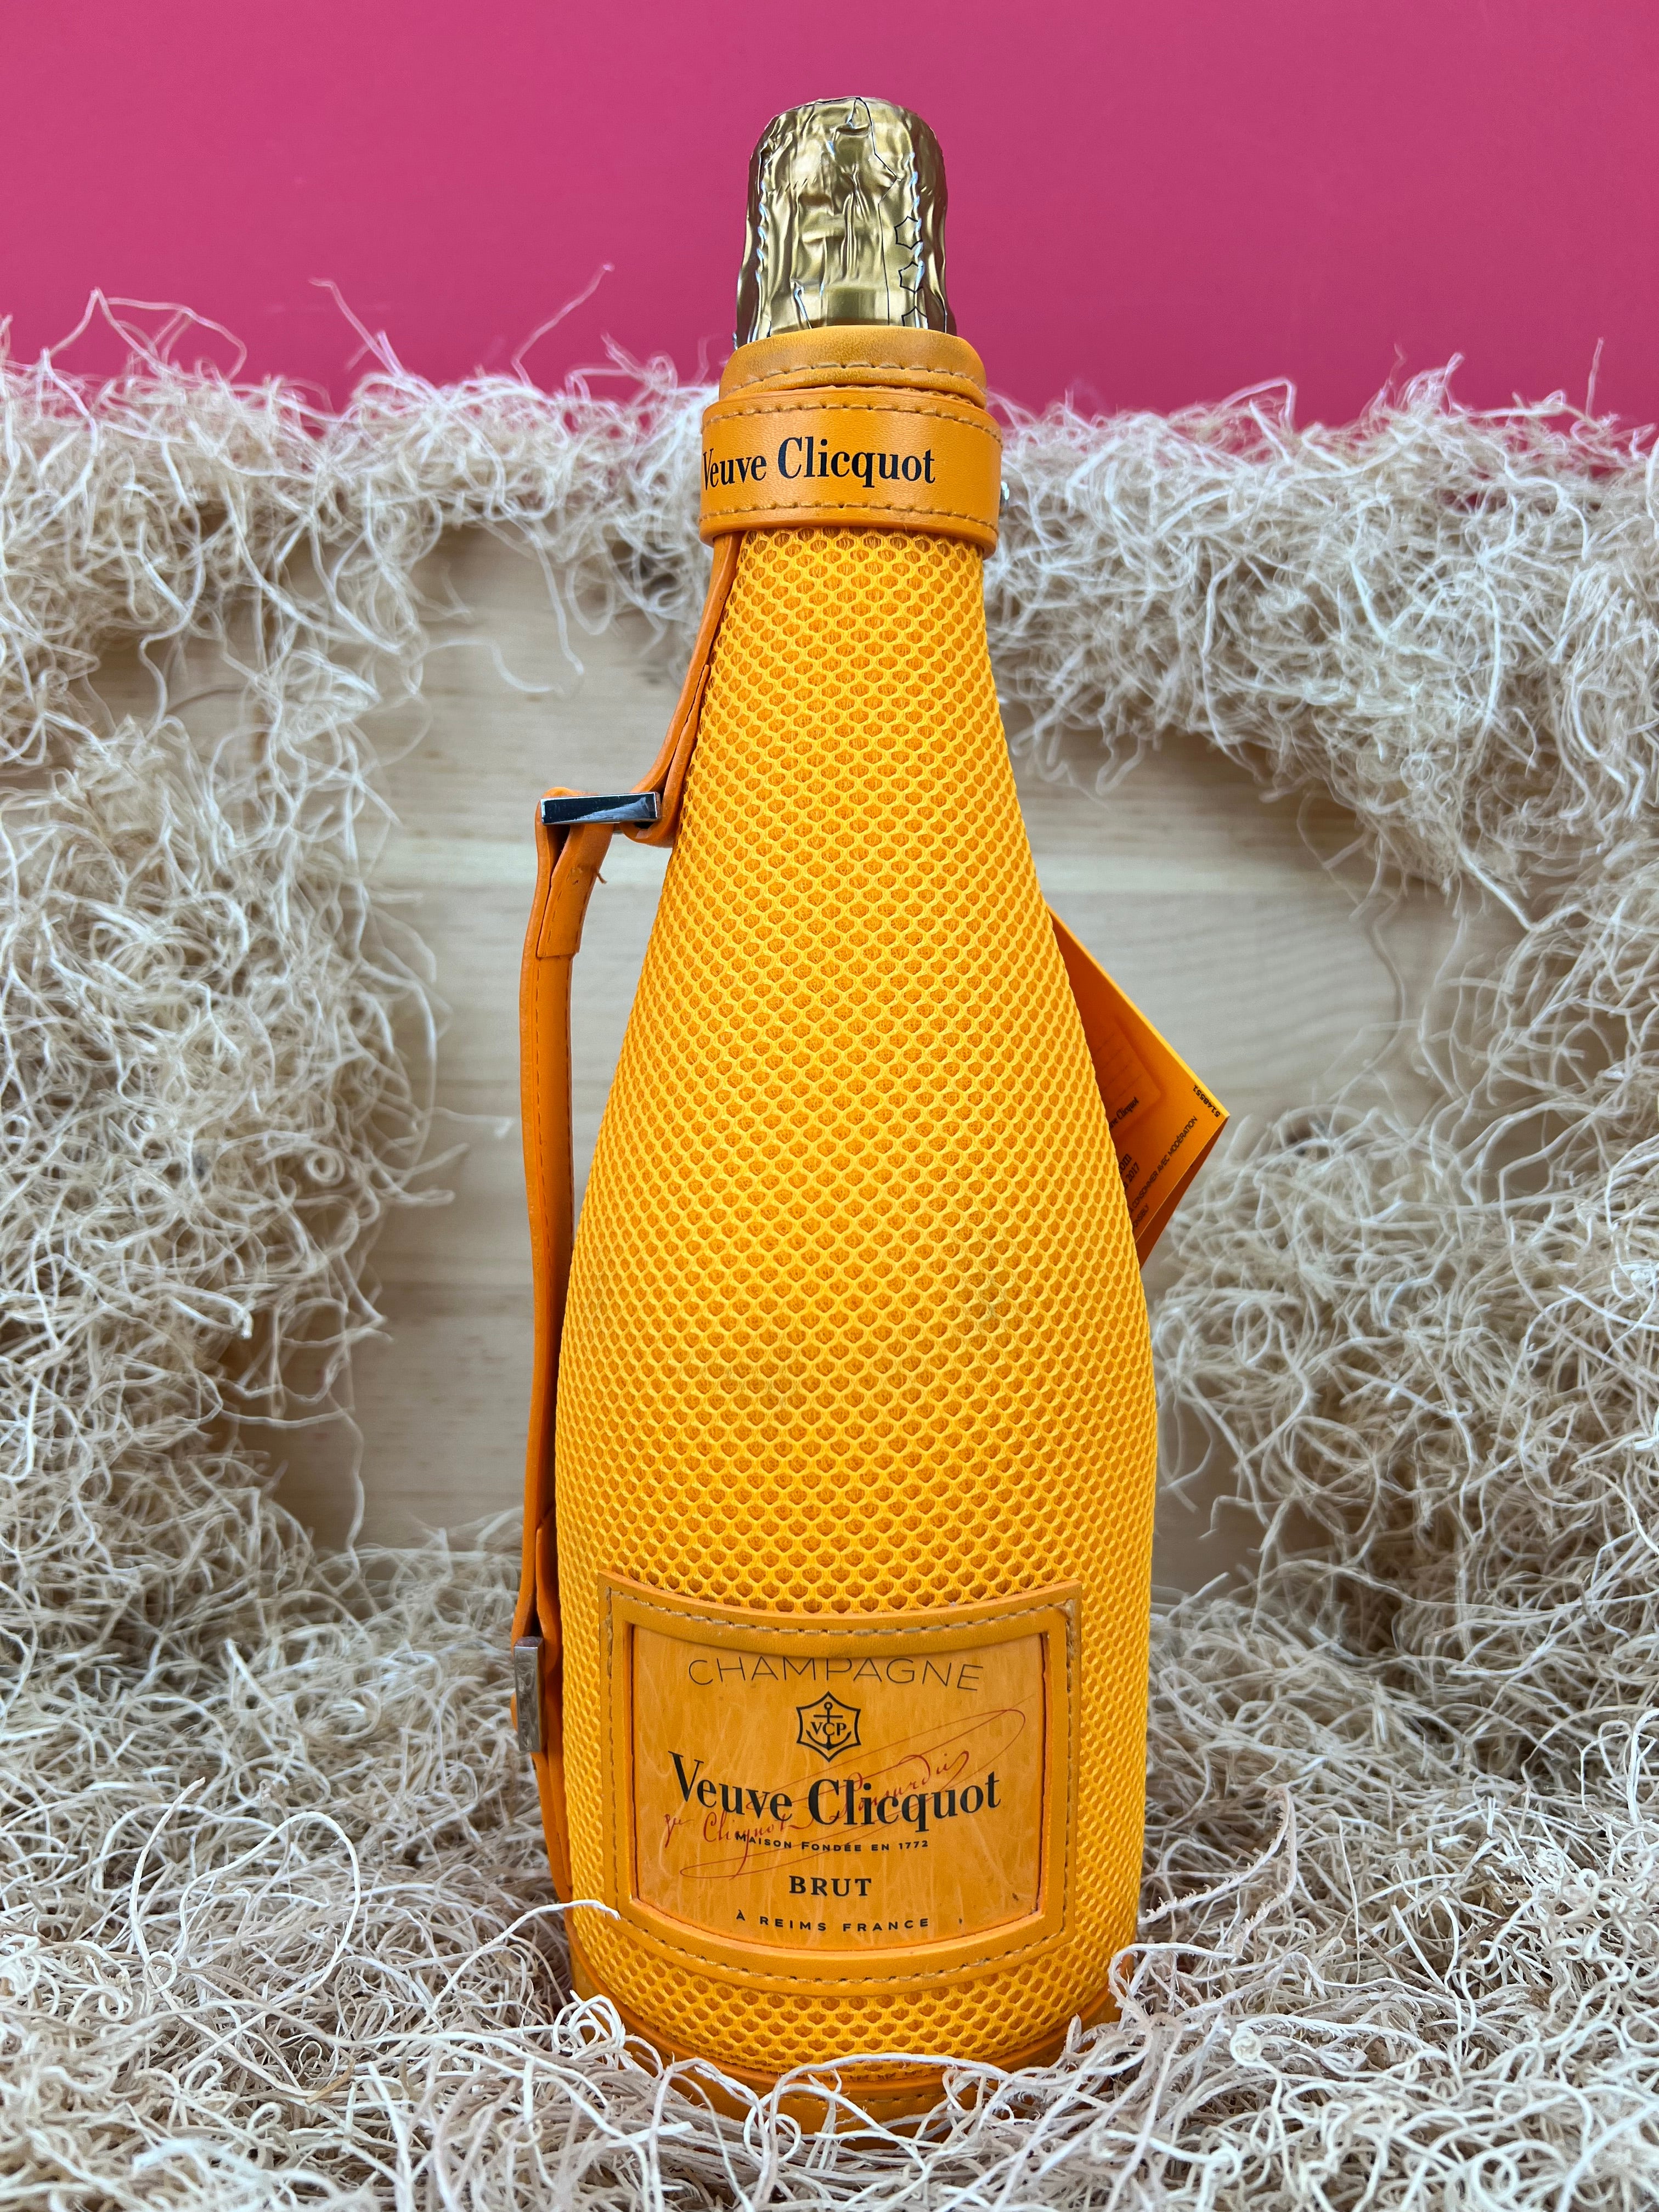 Veuve Clicquot Yellow Label Ponsardin Brut Champagne – CultWine